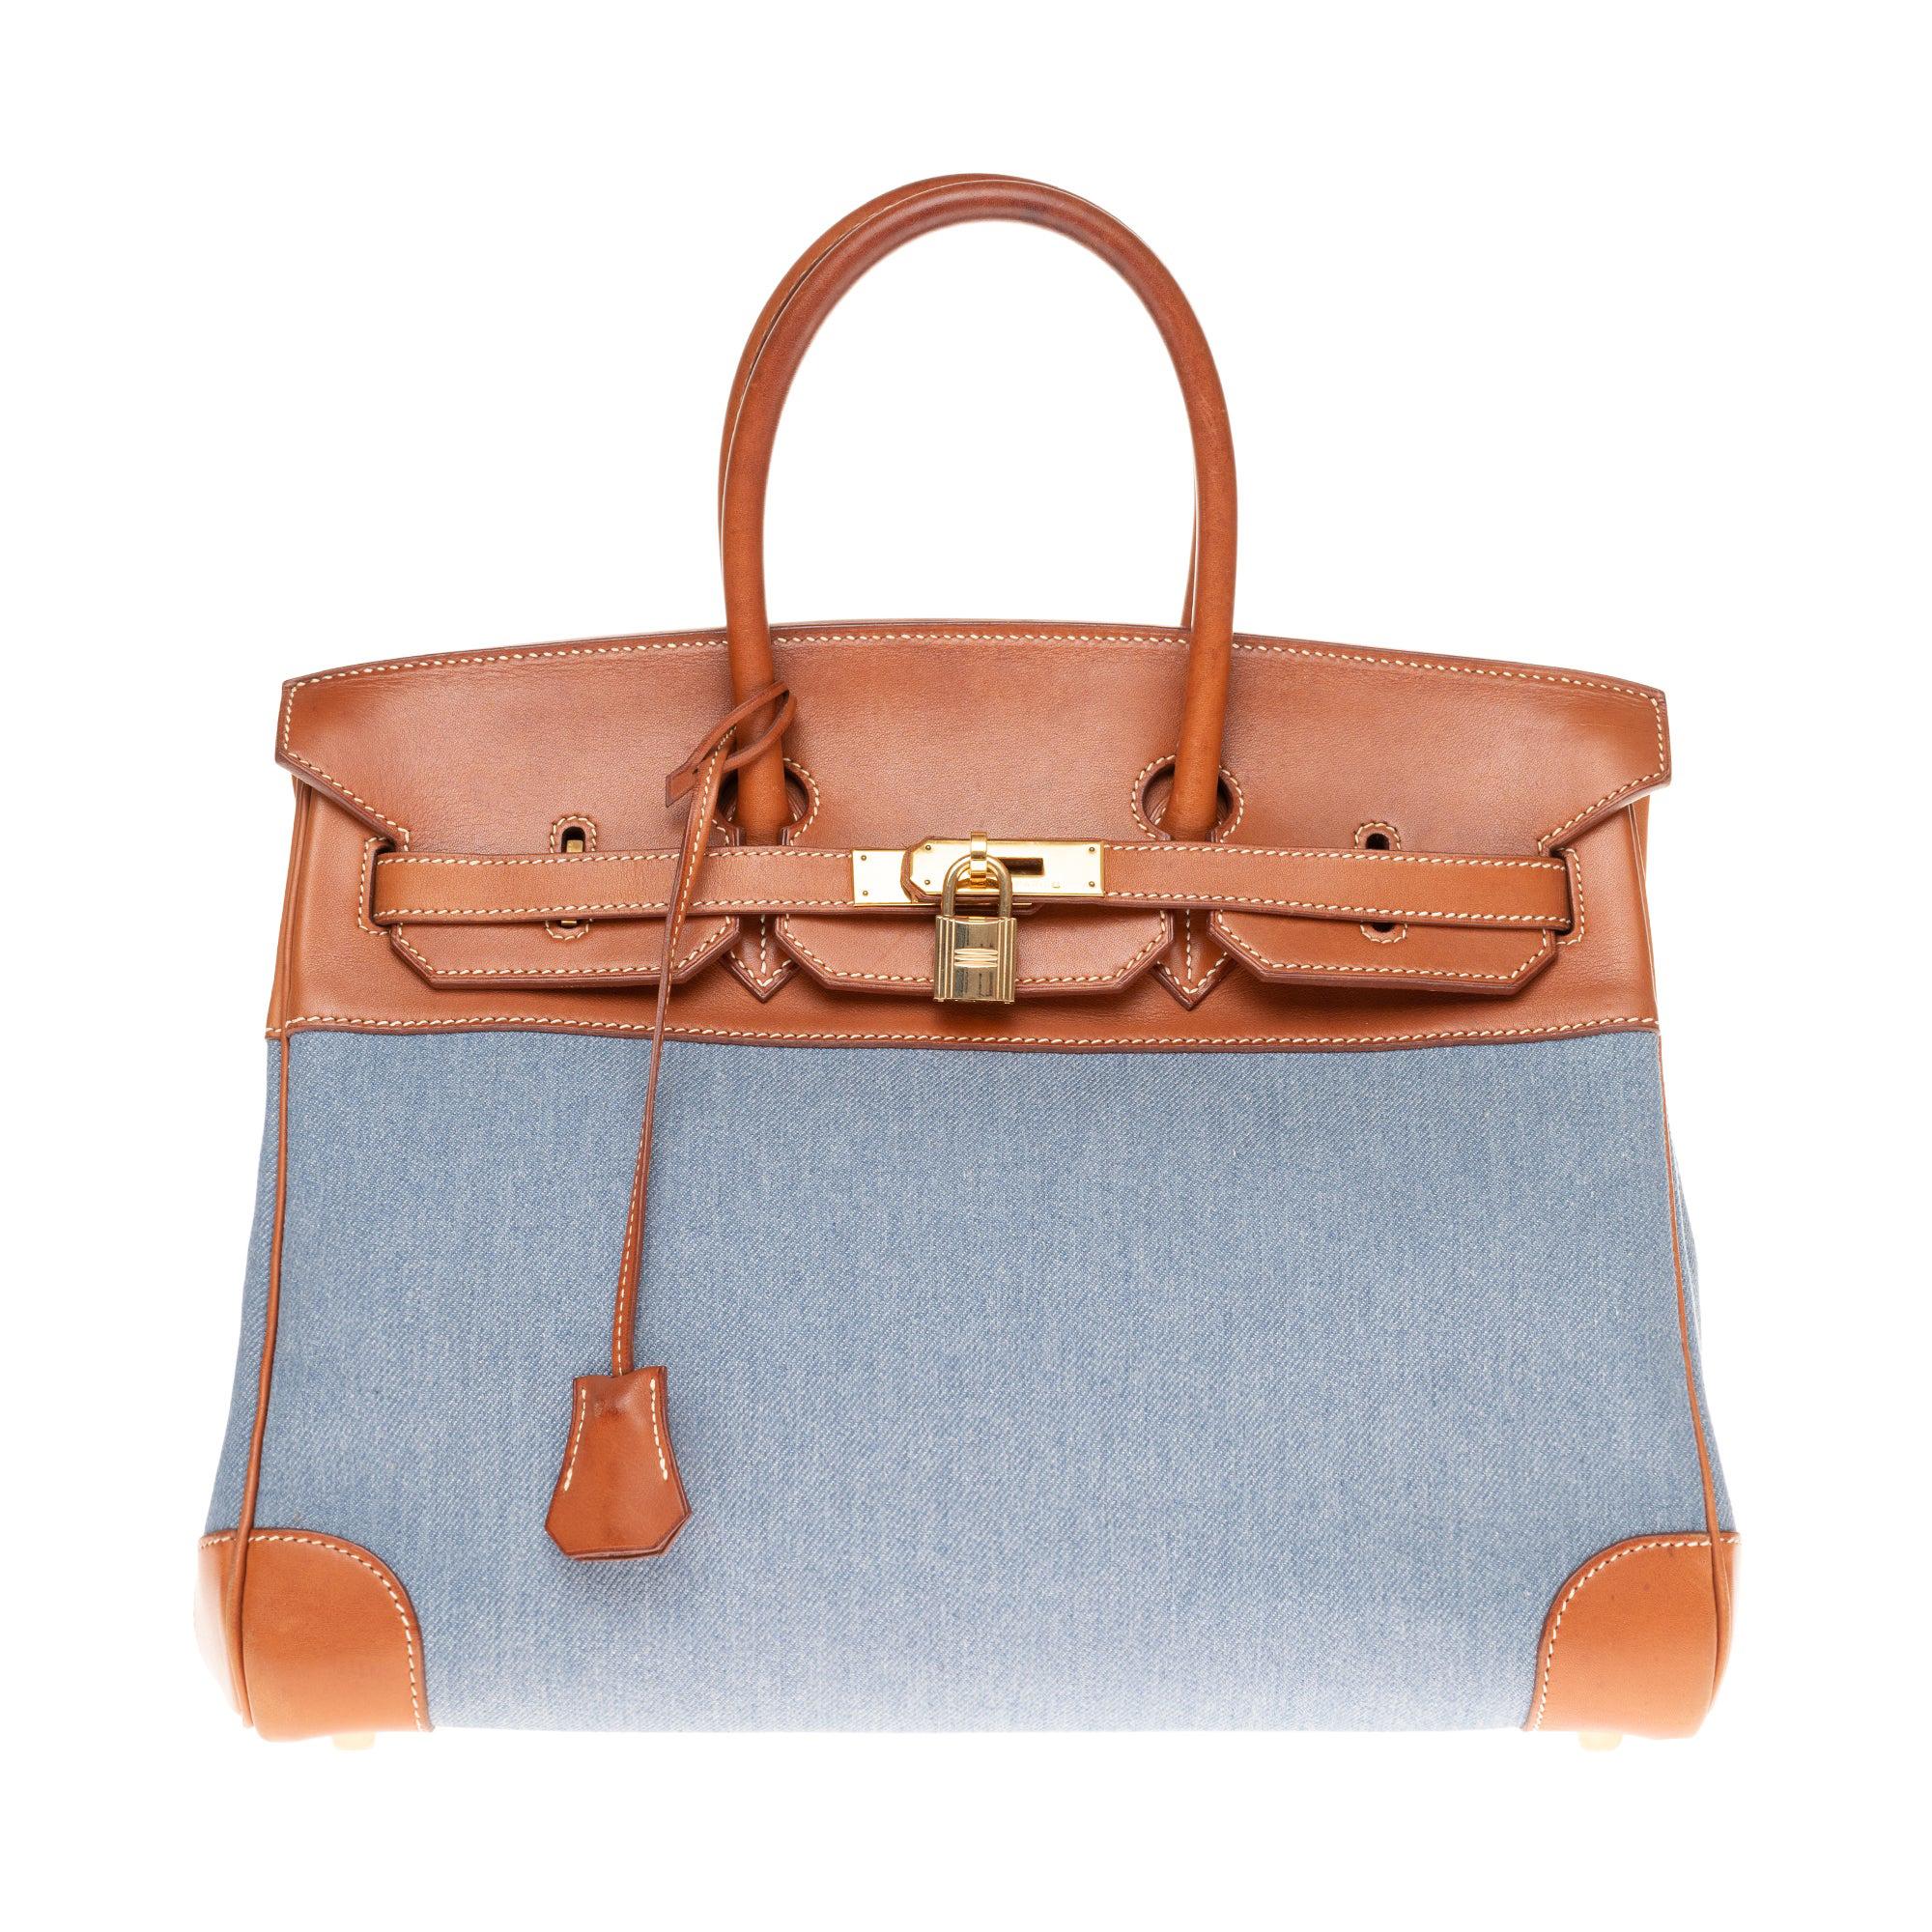 Hermès Birkin 35 handbag in blue denim & brown barenia leather, GHW